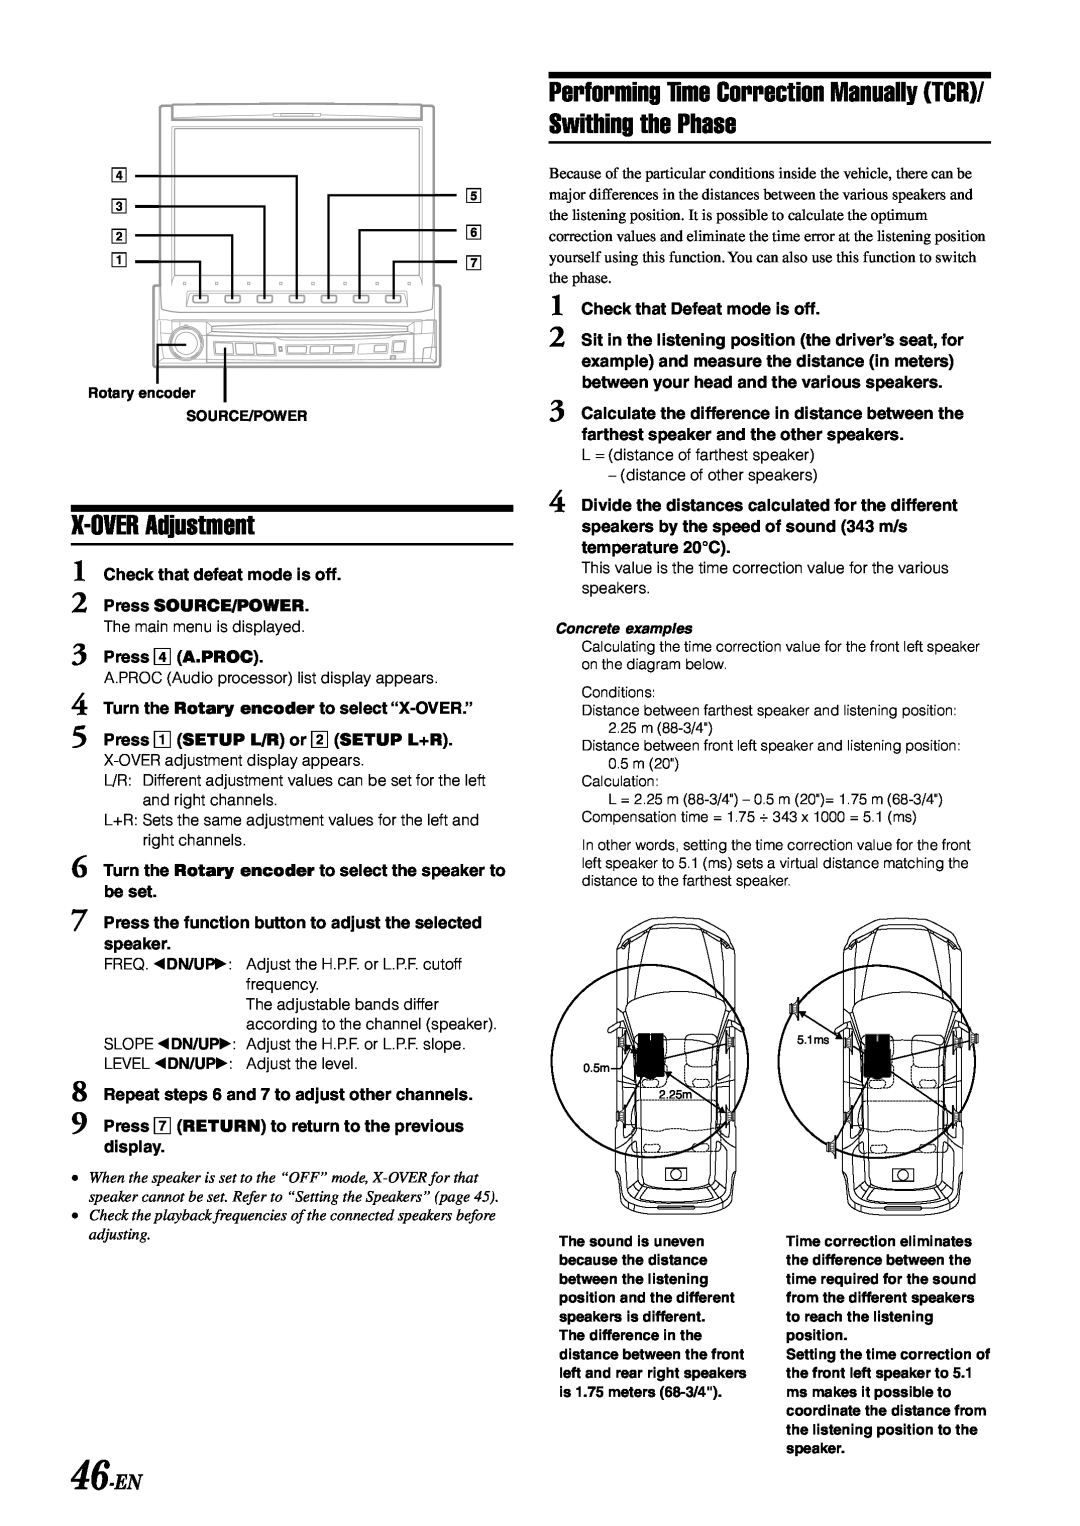 Alpine IVA-D900 owner manual X-OVERAdjustment, 46-EN 